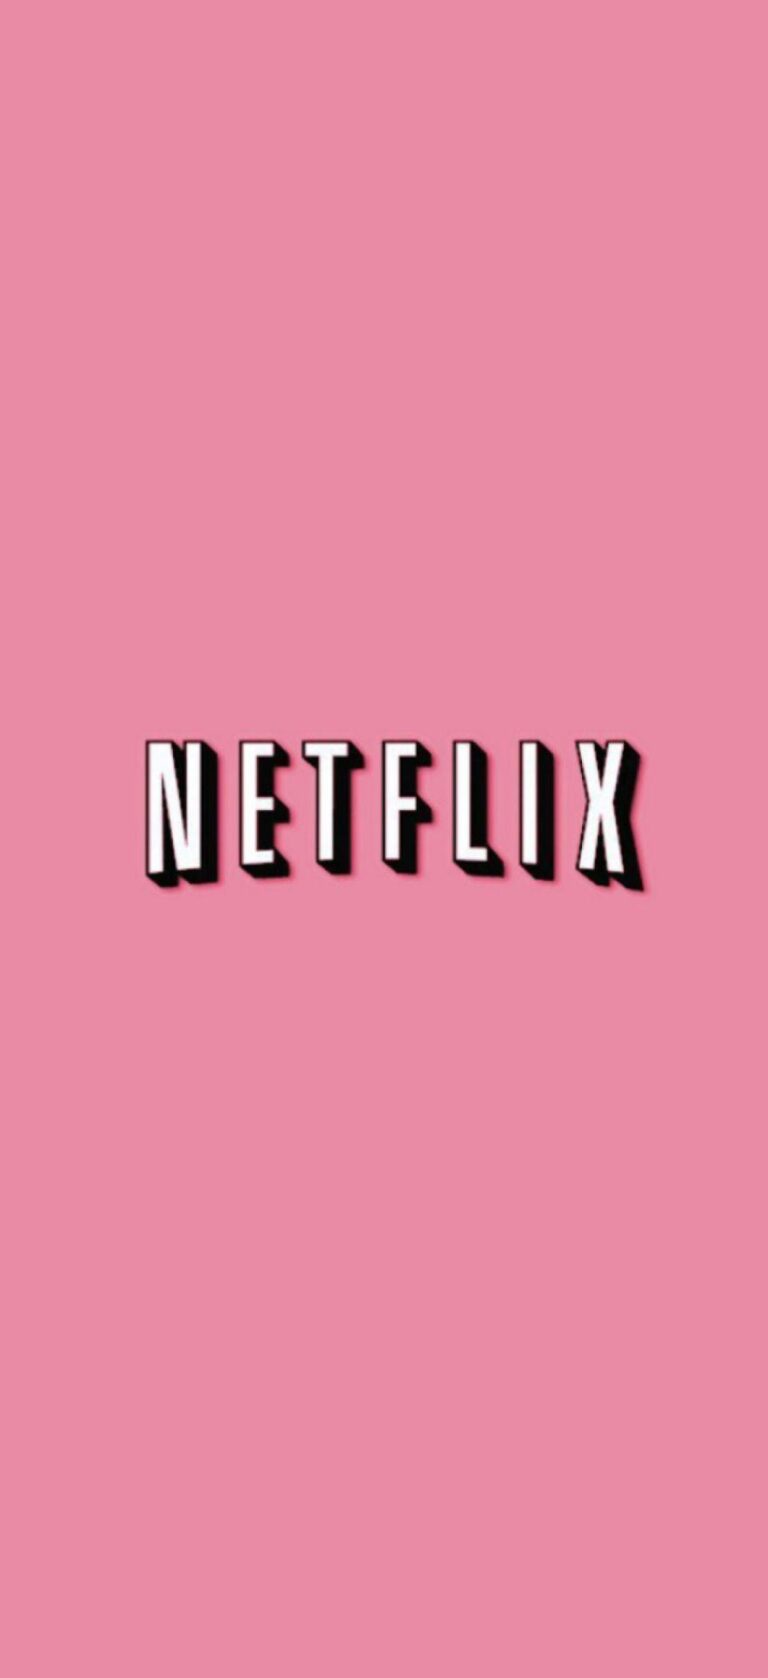 Netflix Wallpaper 4k Download For Laptop - Wallpaperforu